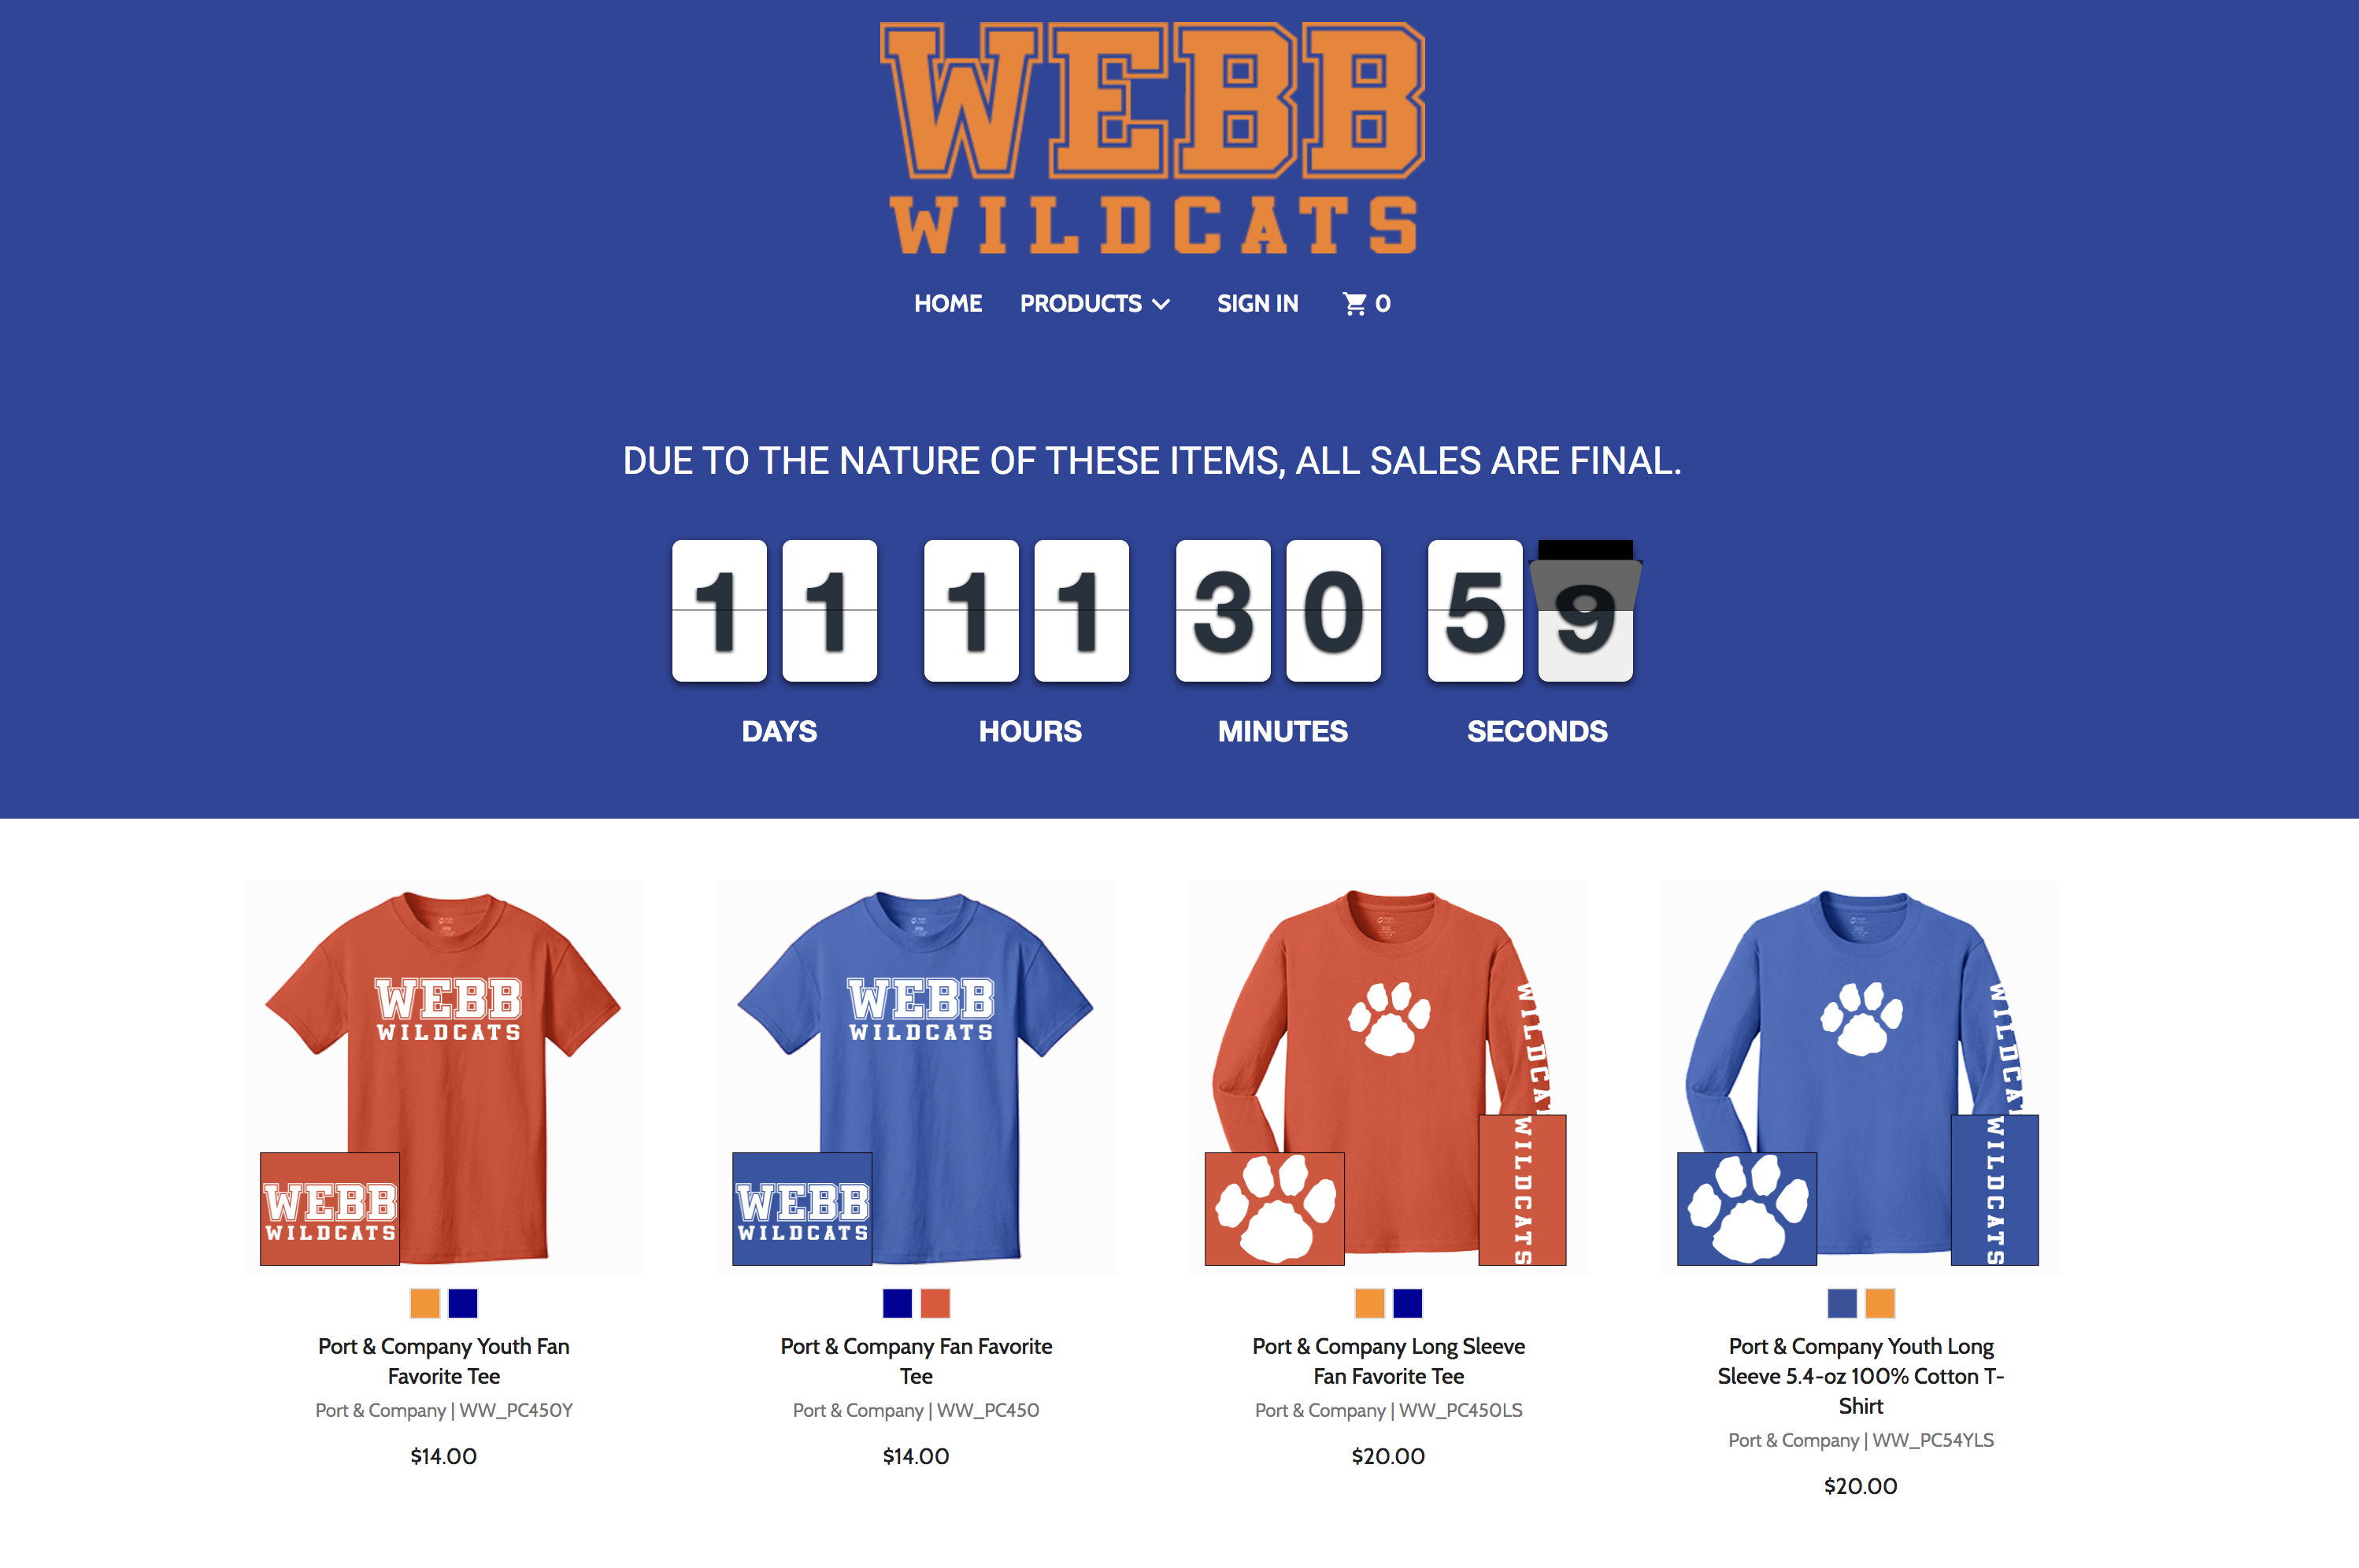 Webb Wildcats 2019 Shop